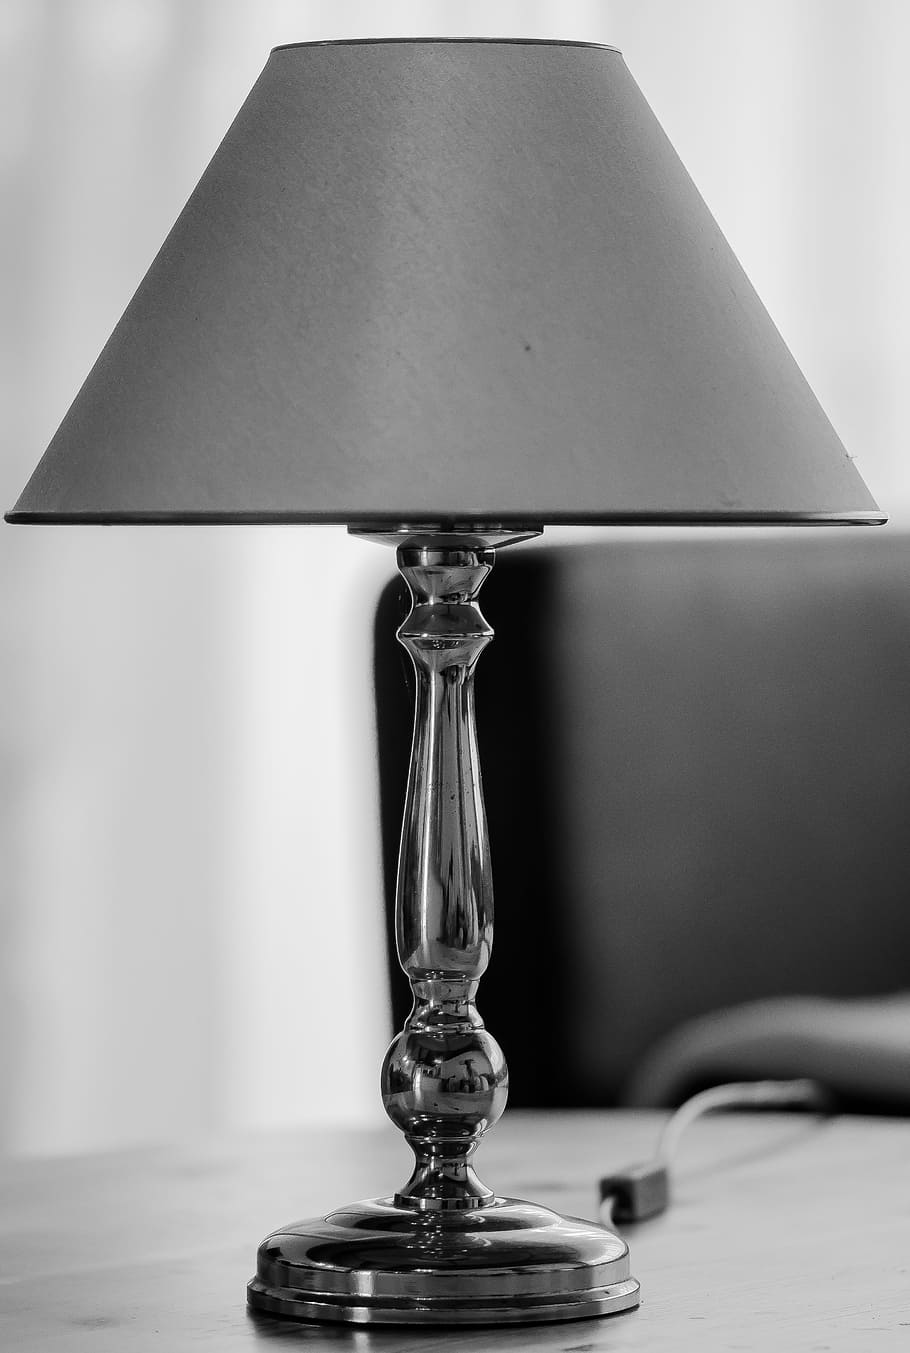 Table Lamp, Lampshade, Decorative, lamp, lighting, light, retro, atmosphere, shiny, old